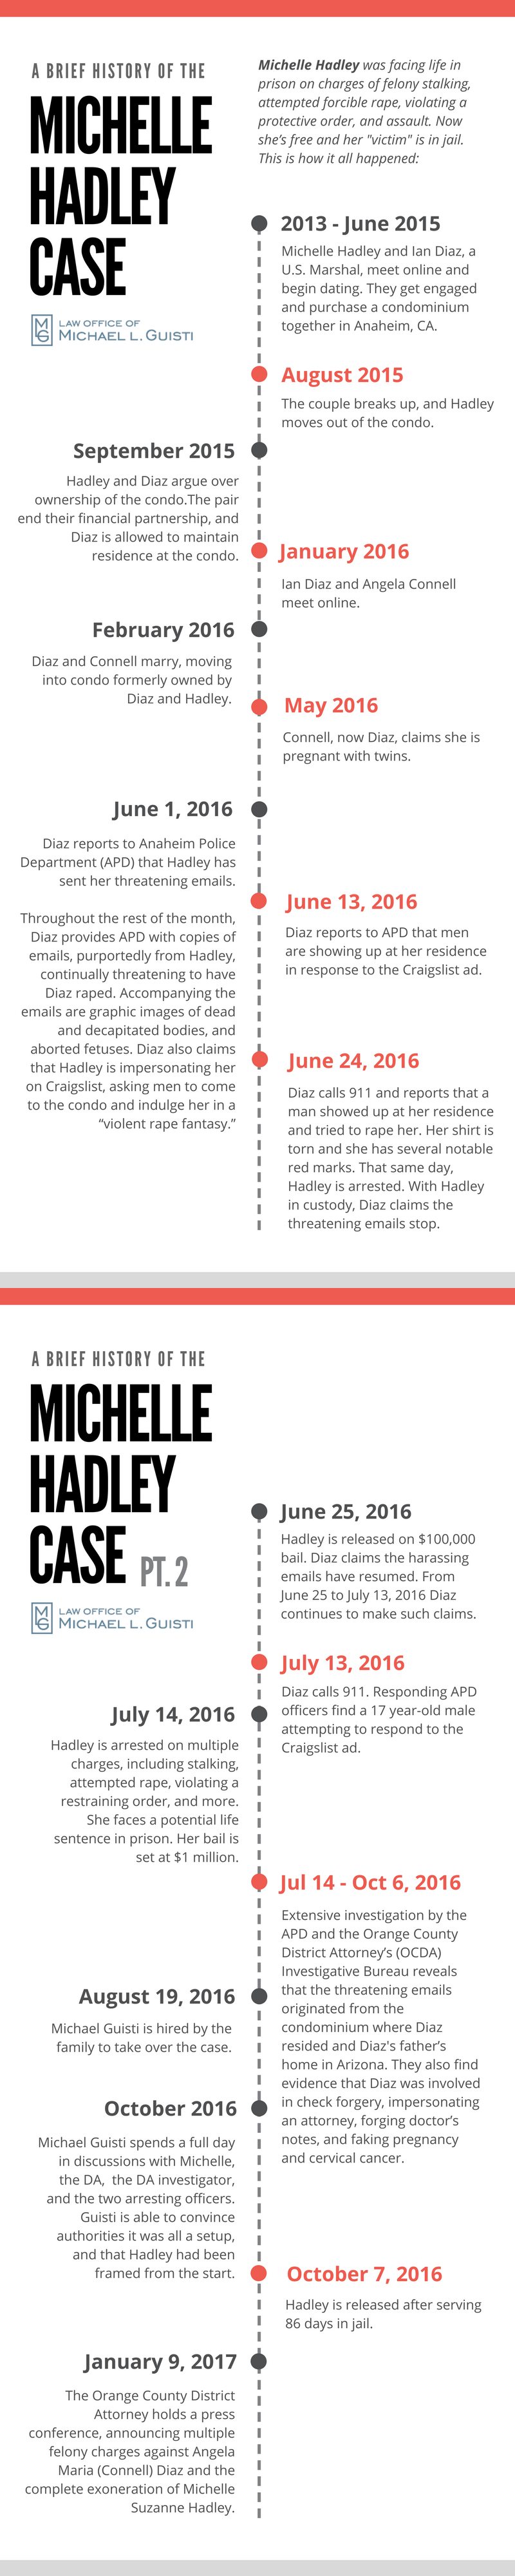 Michelle Hadley Timeline